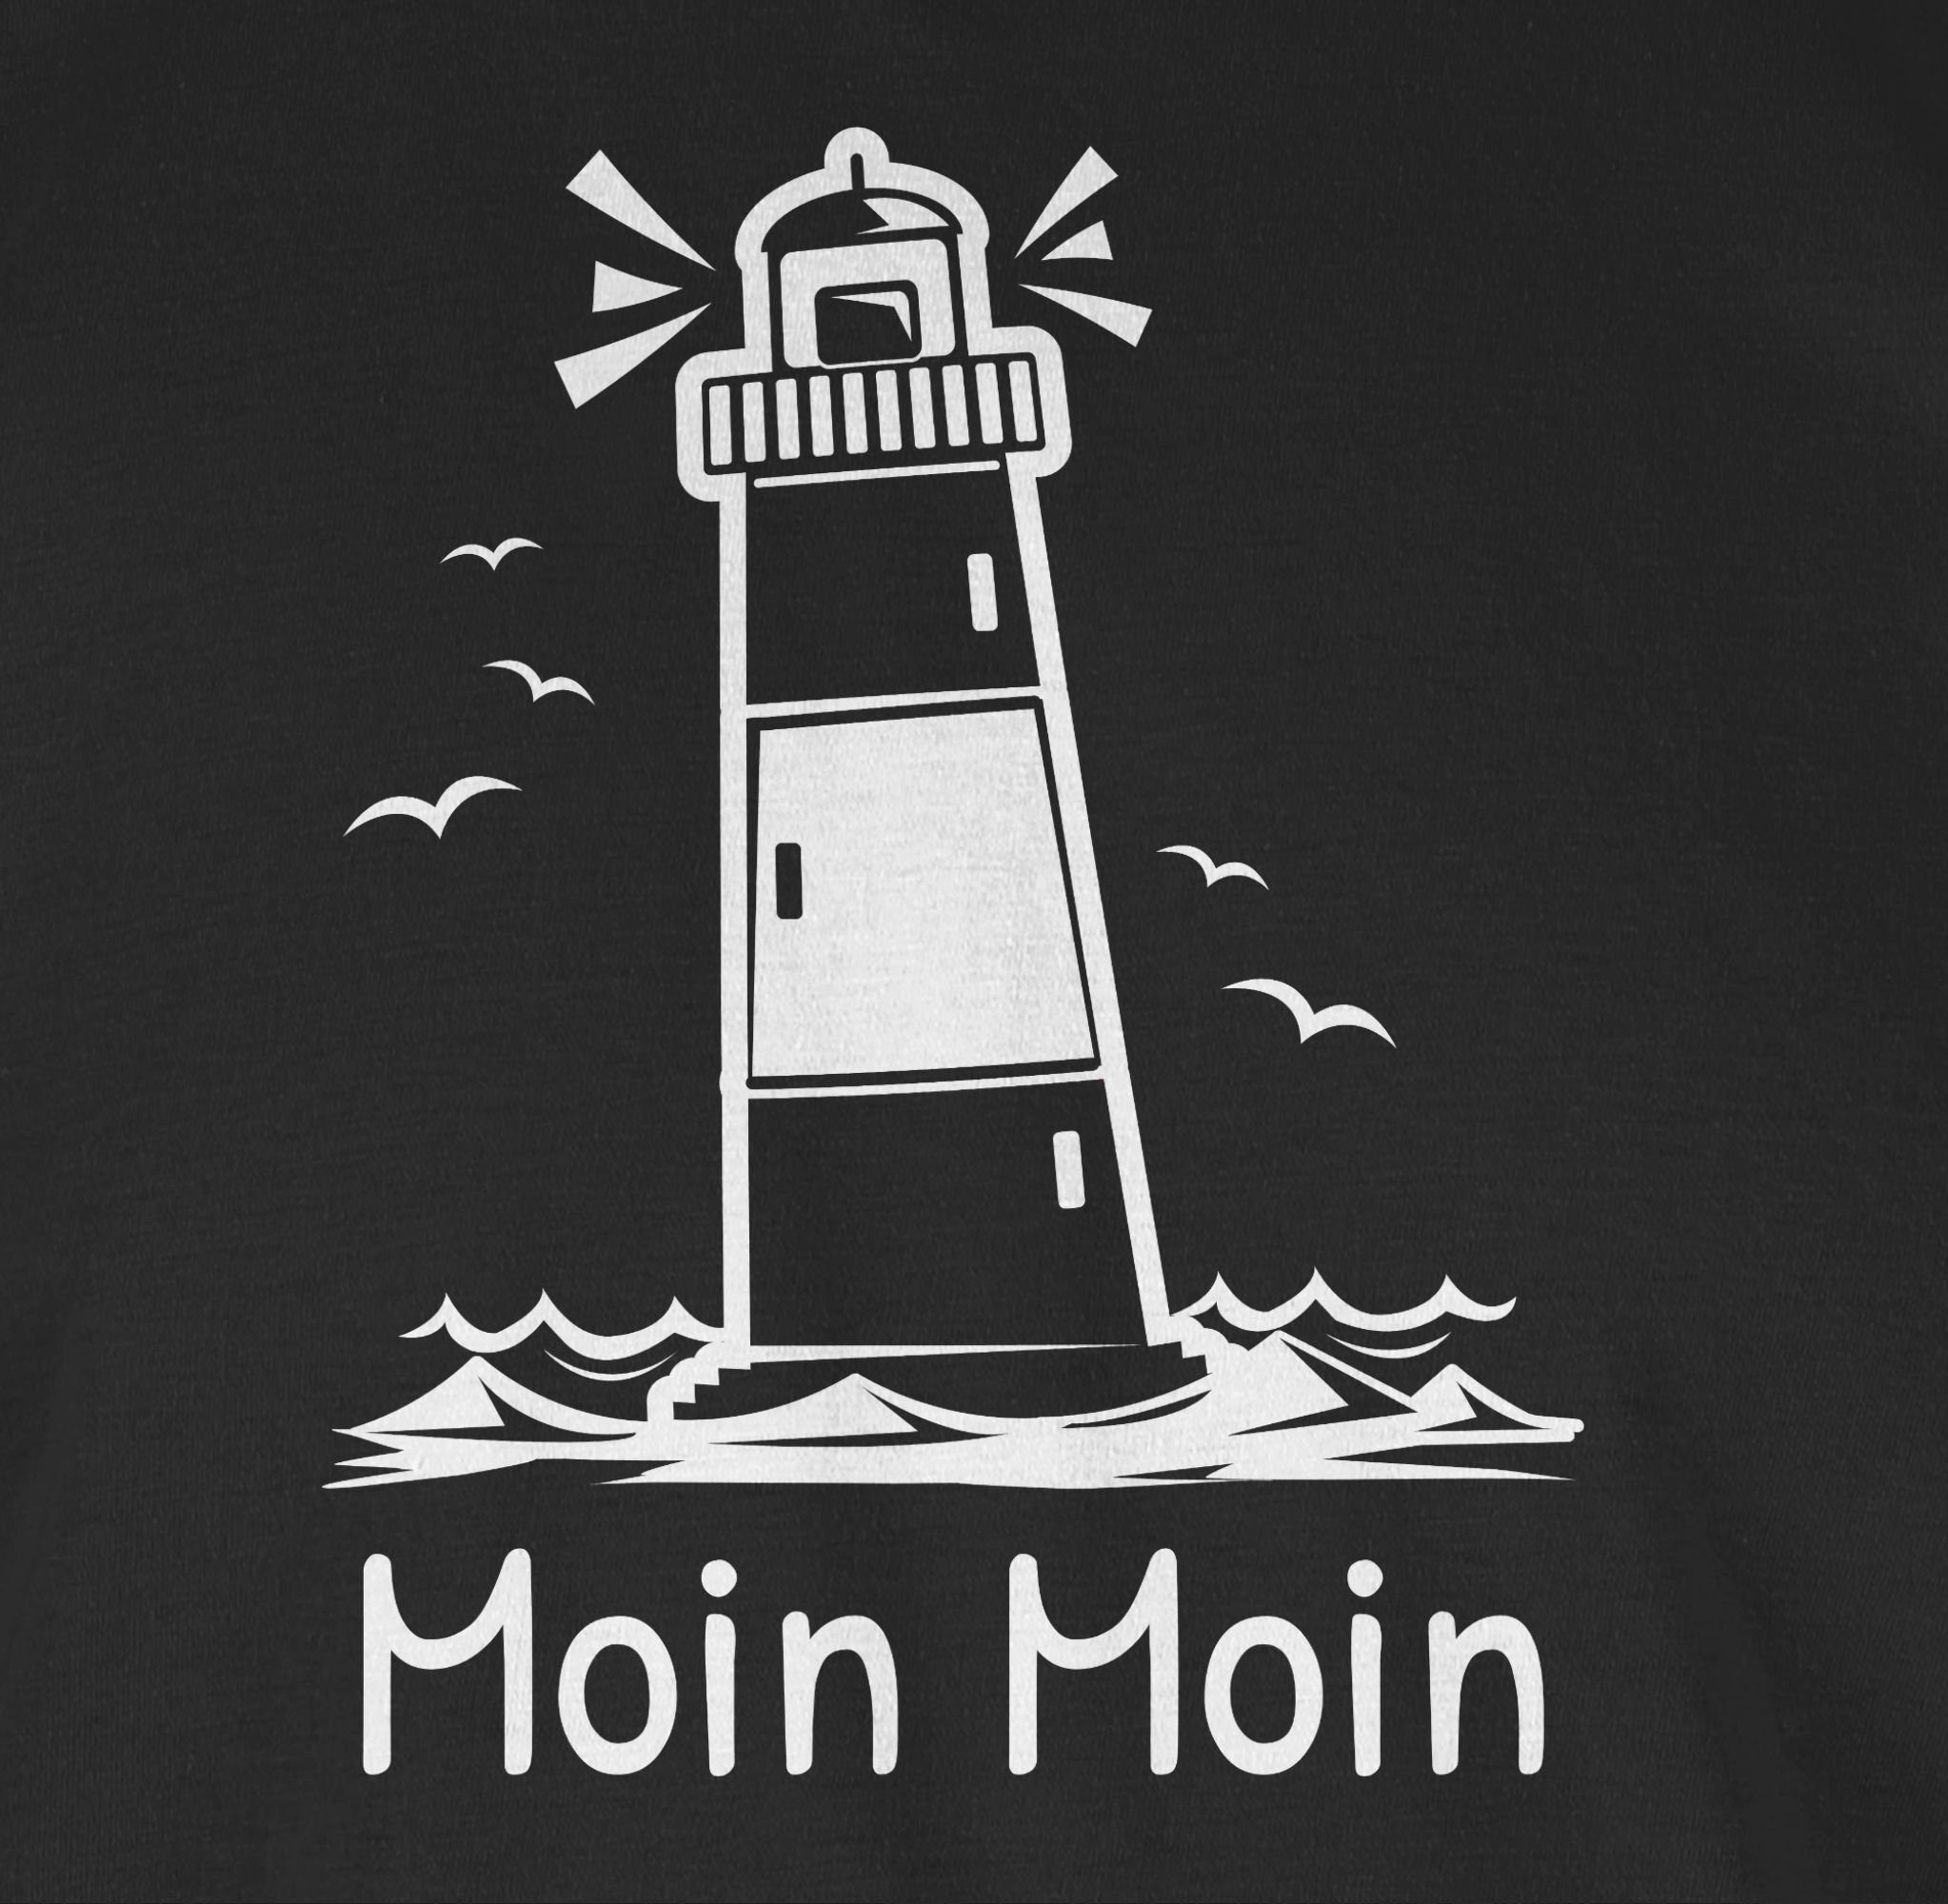 01 Shirtracer Statement T-Shirt - Moin Sprüche Moin Leuchtturm Schwarz